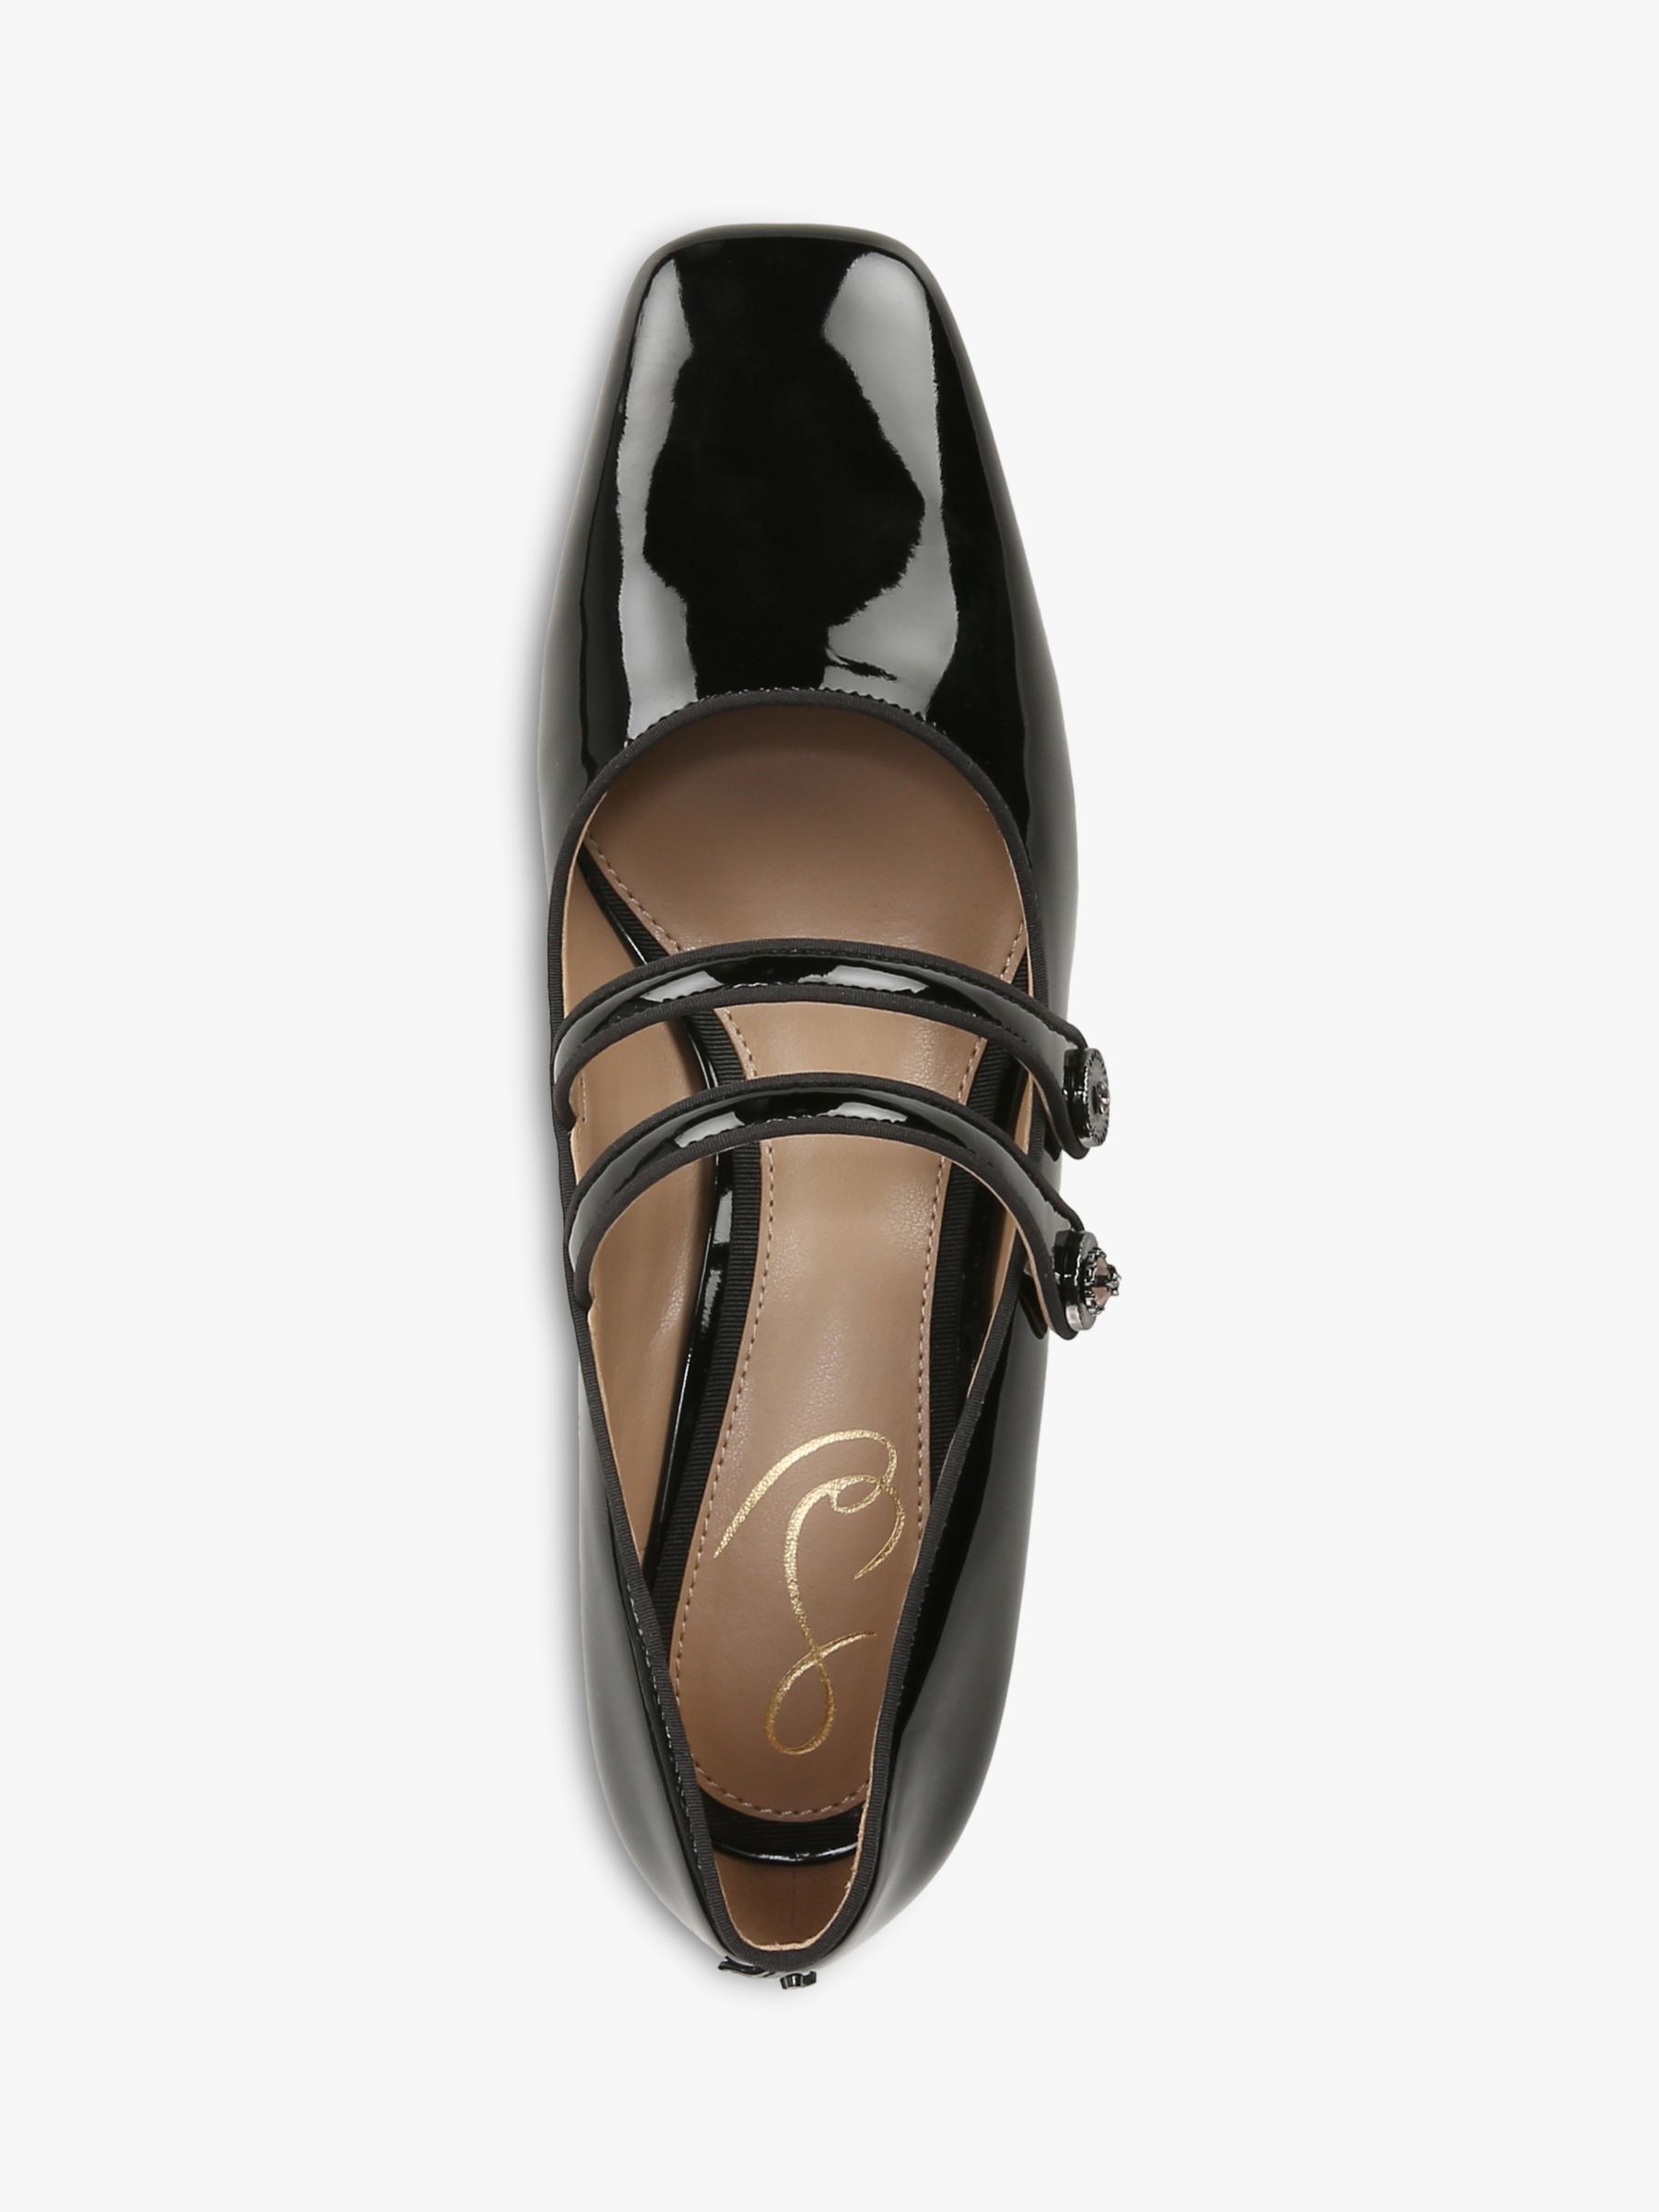 Sam Edelman Tahira Heeled Mary Jane Shoes, Black at John Lewis & Partners